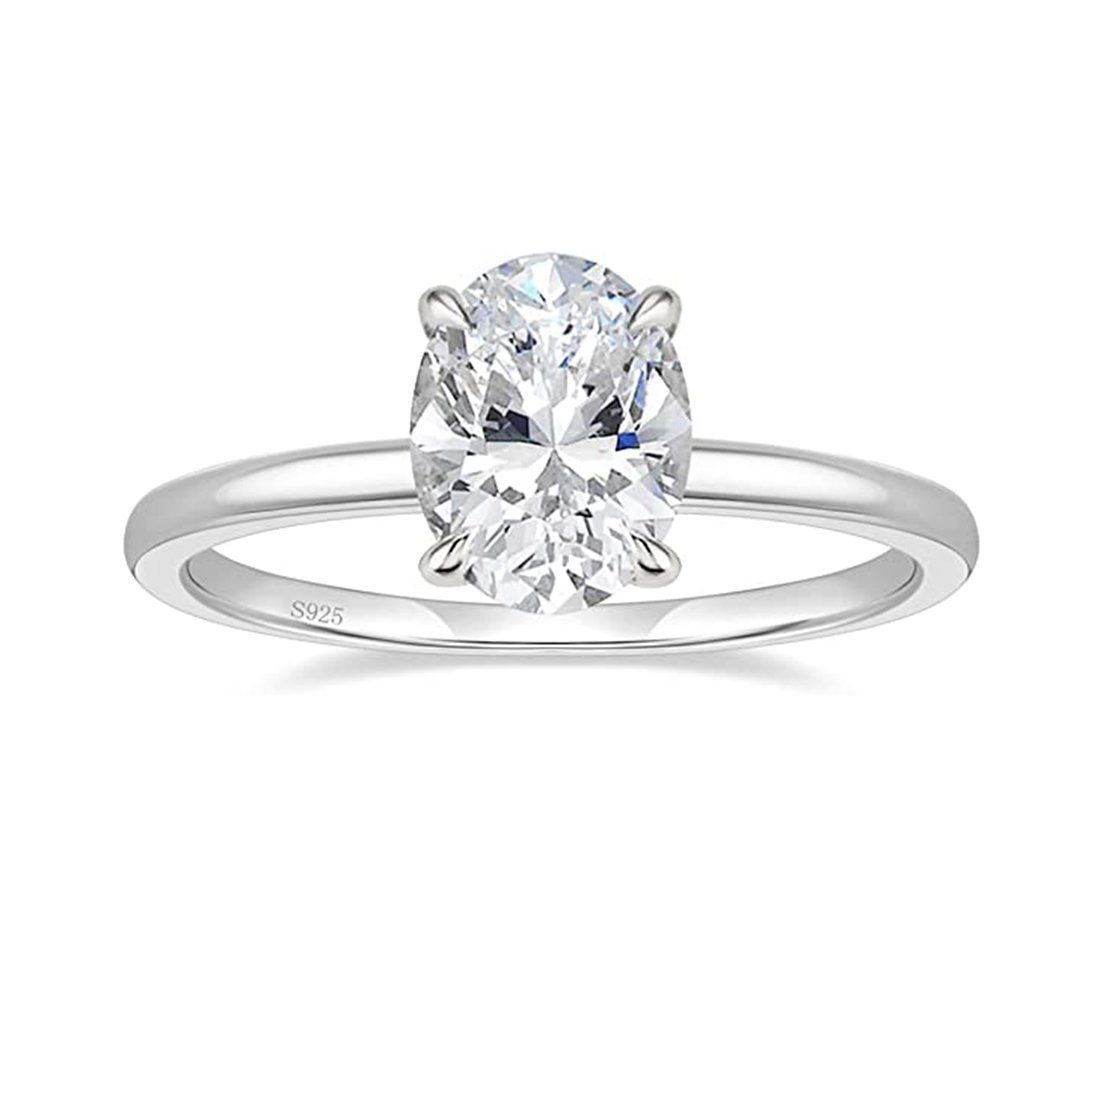 Haiaveng Fingerring 925 Sterling Silber Ringe, Oval Cut Solitär Cubic Zirconia Hochzeit Versprechen Ringe